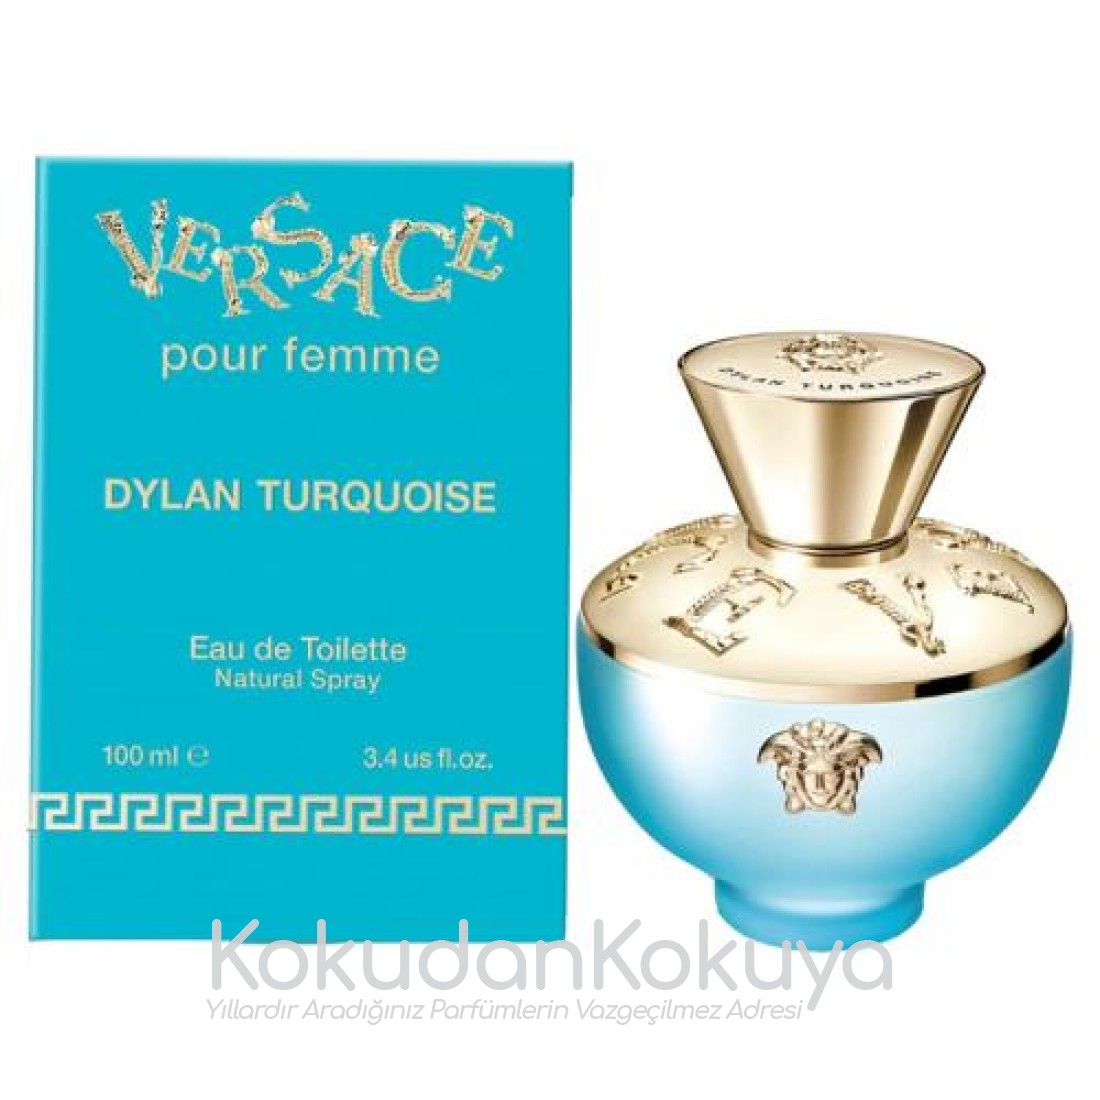 VERSACE (2022) Kadın Versace Pour Femme Dylan Turquoise